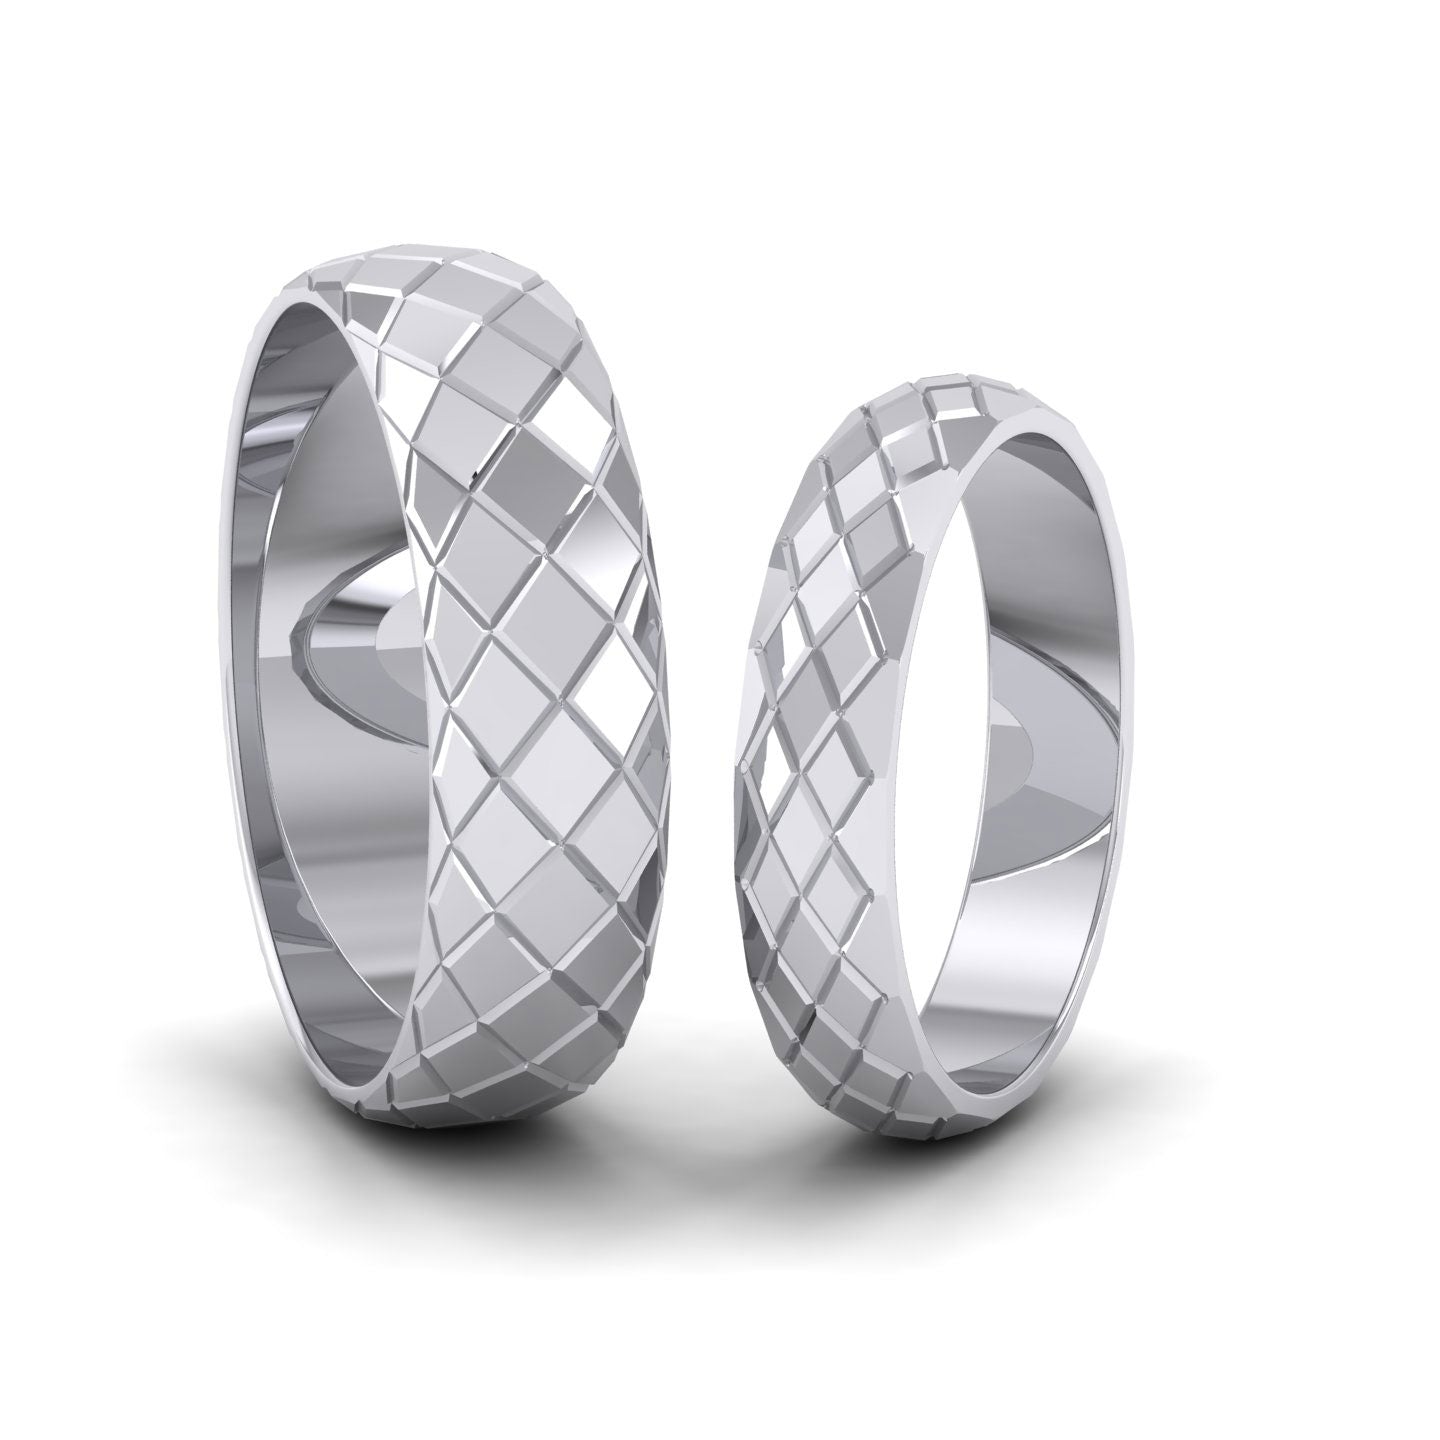 Facet And Line Harlequin Design Sterling Silver 4mm Wedding Ring